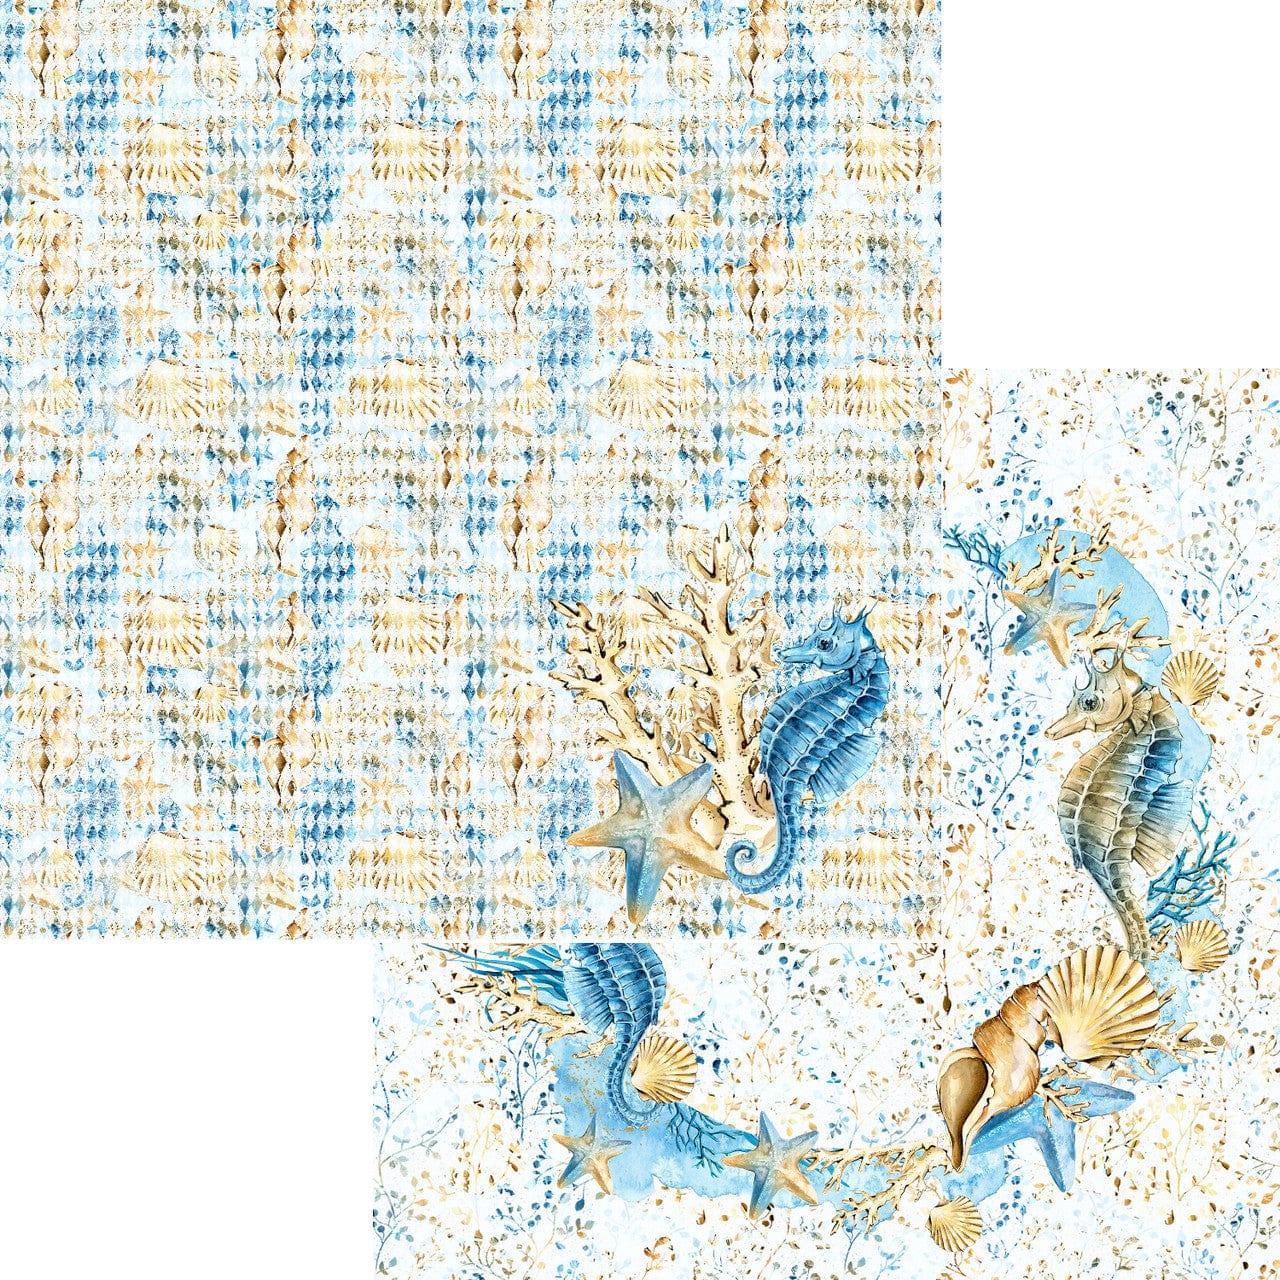 Frou Frou's Sun & Sand 12 x 12 Scrapbook Paper & Embellishment Kit by SSC Designs - Scrapbook Supply Companies